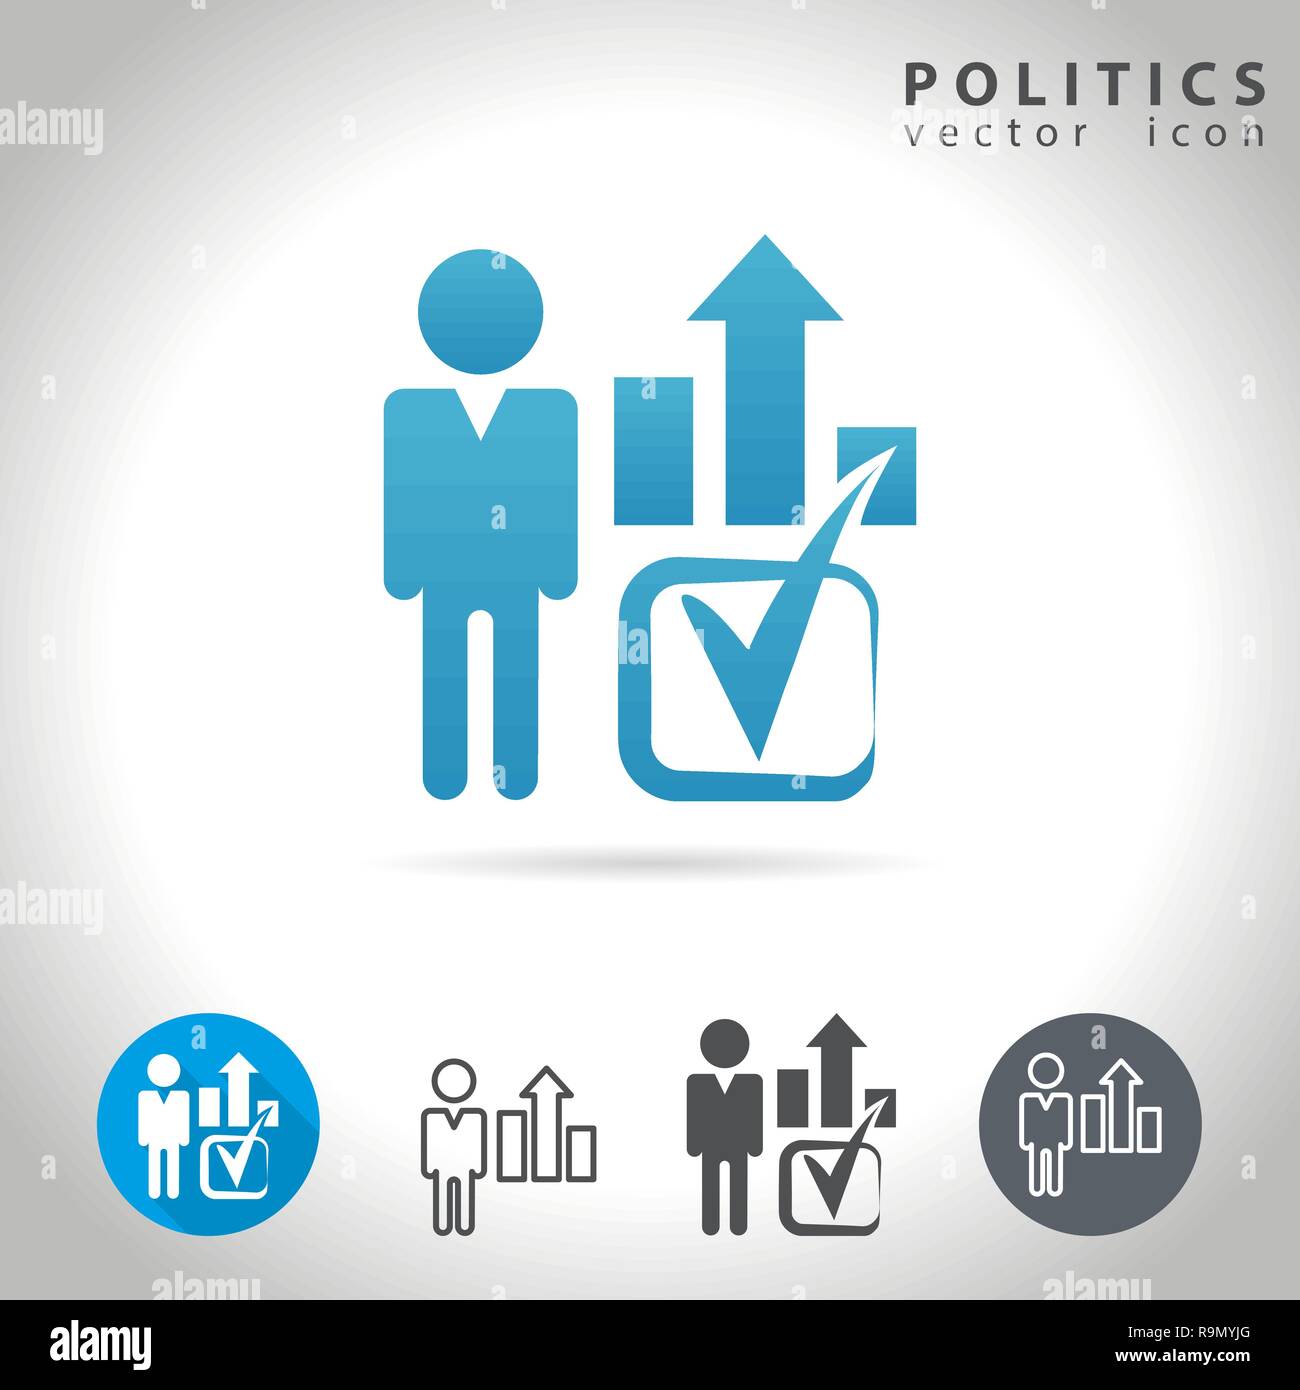 Politics icon set, collection voting symbols, vector illustration Stock Vector